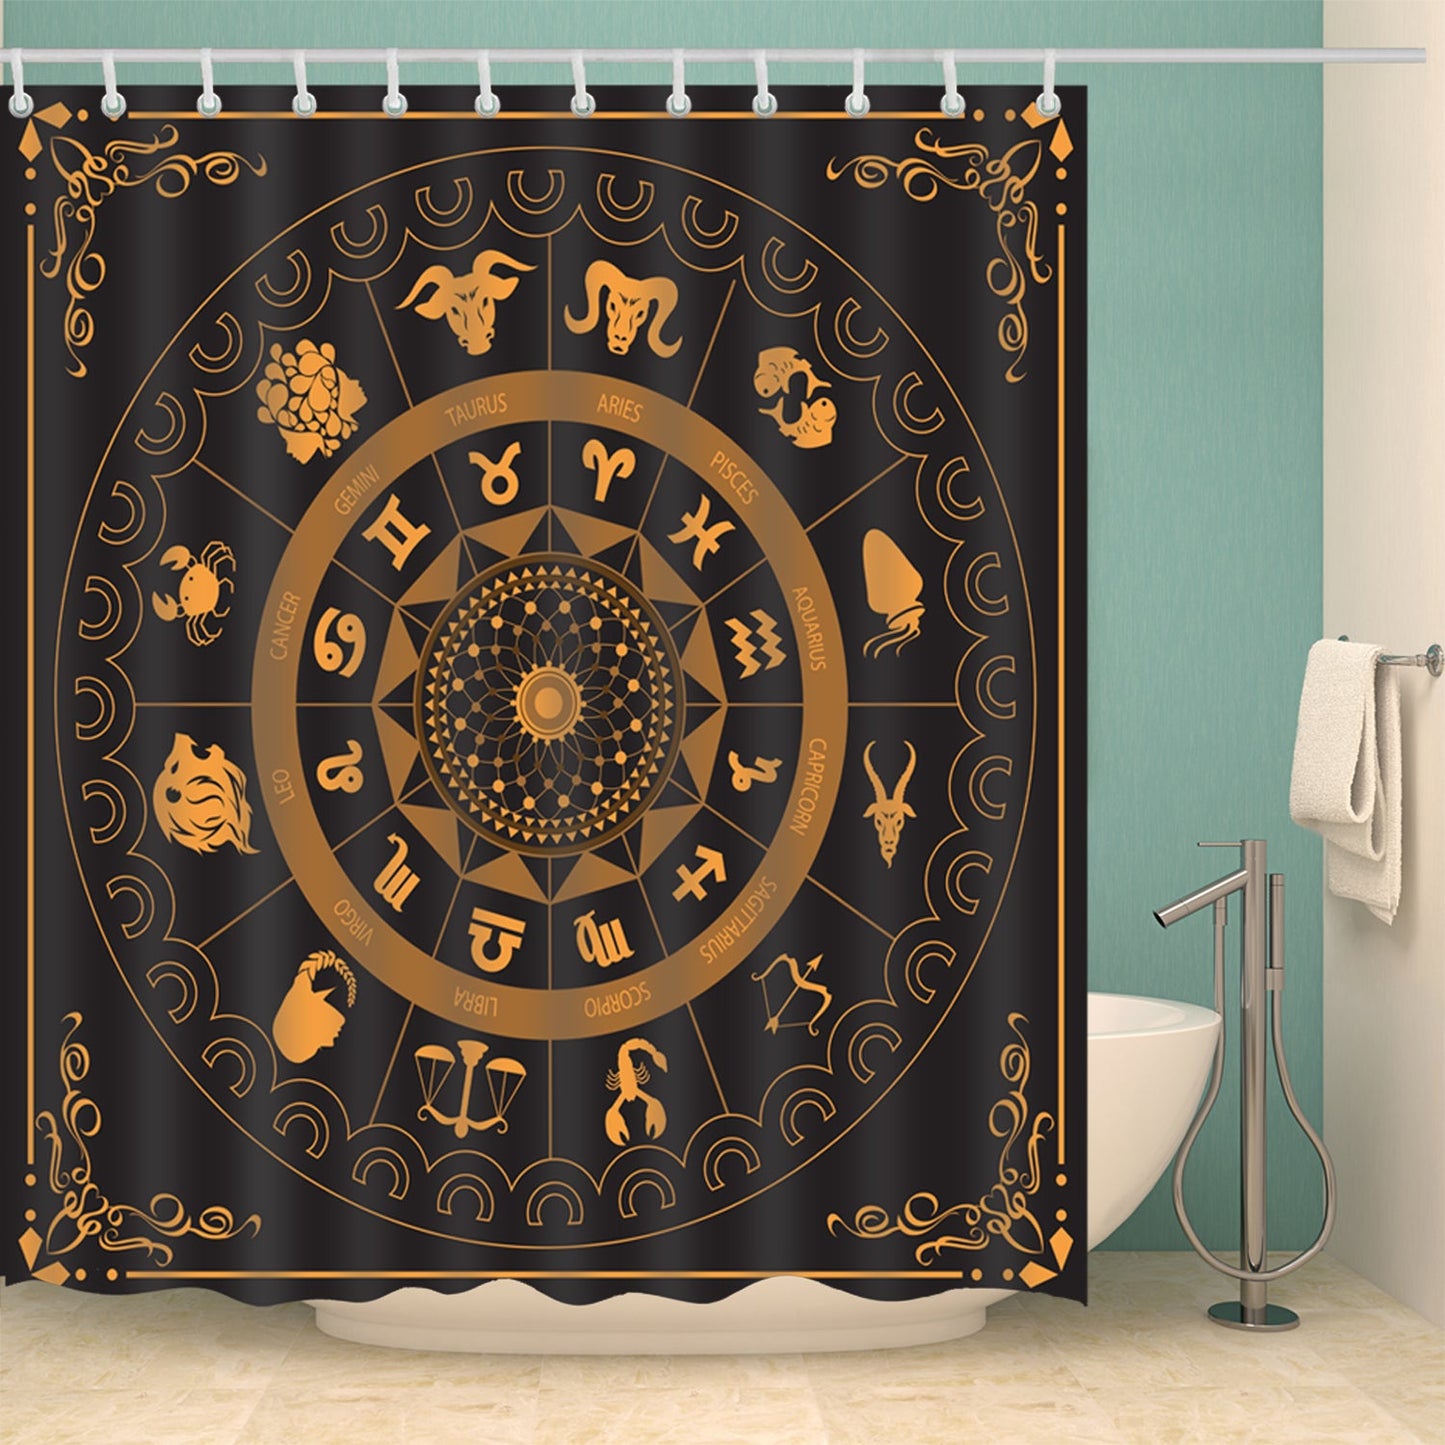 Zodiac Astrological Signs Symbols Shower Curtain